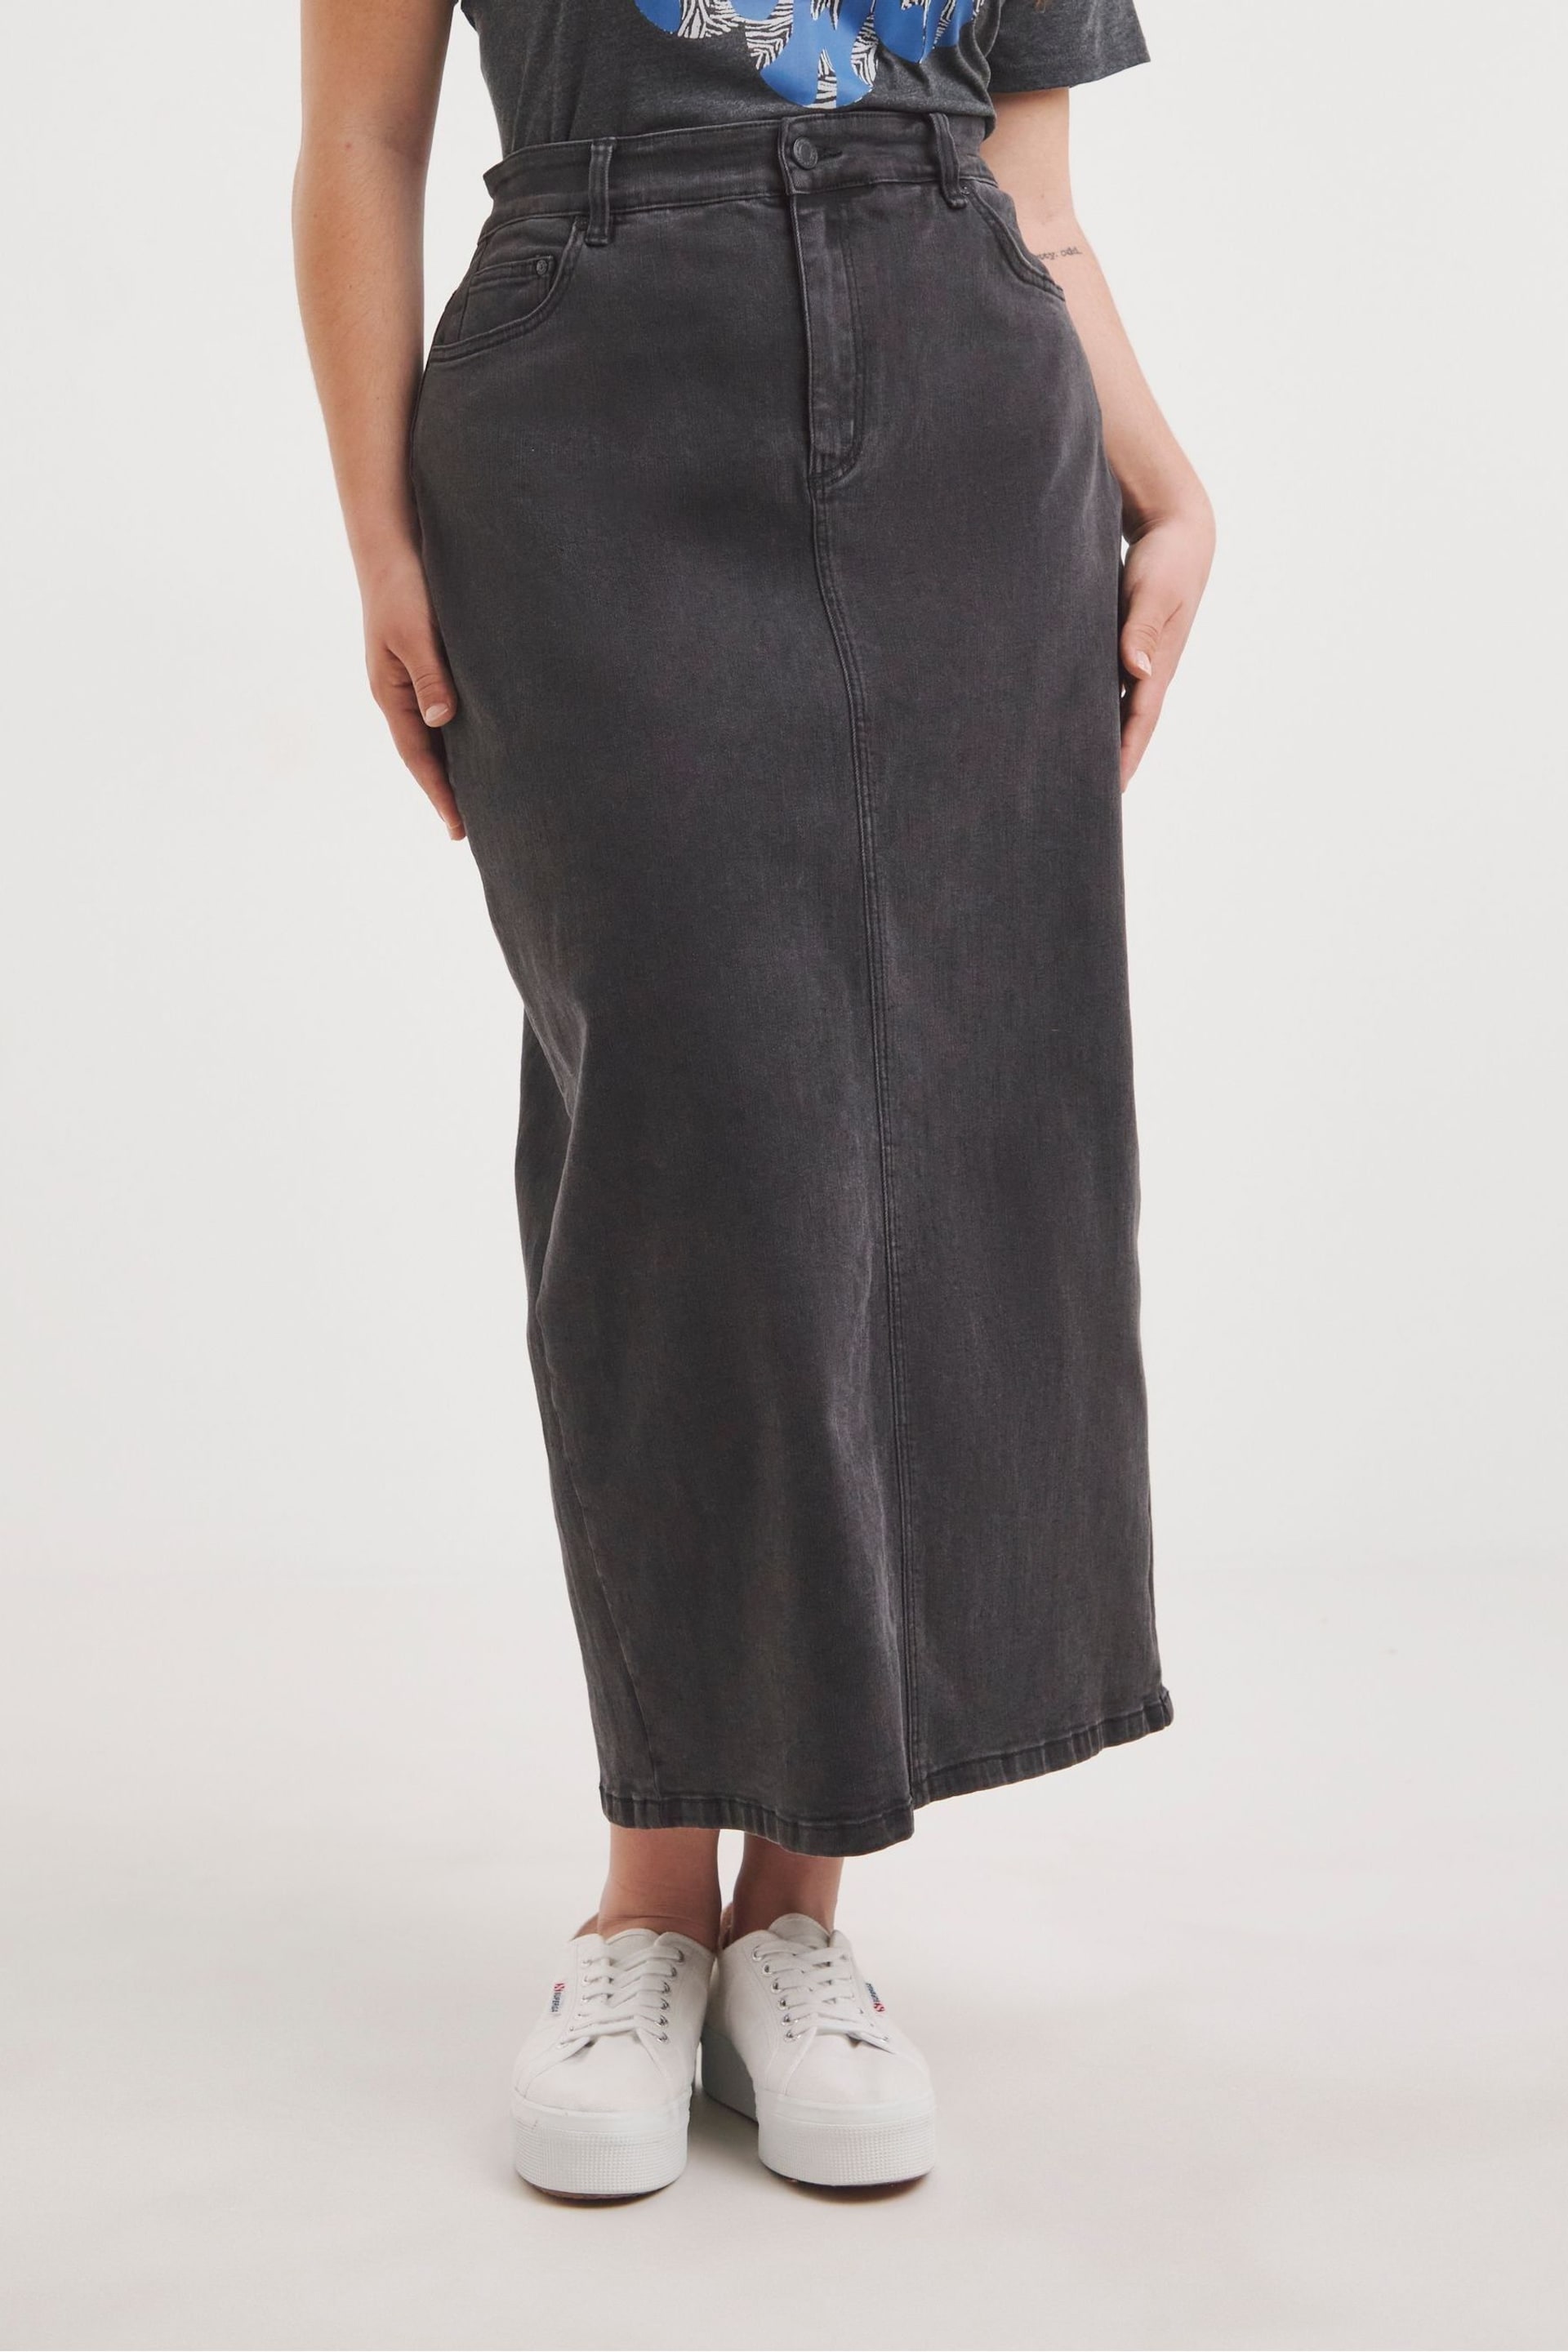 Simply Be Black Column Denim Maxi Skirt - Image 2 of 4